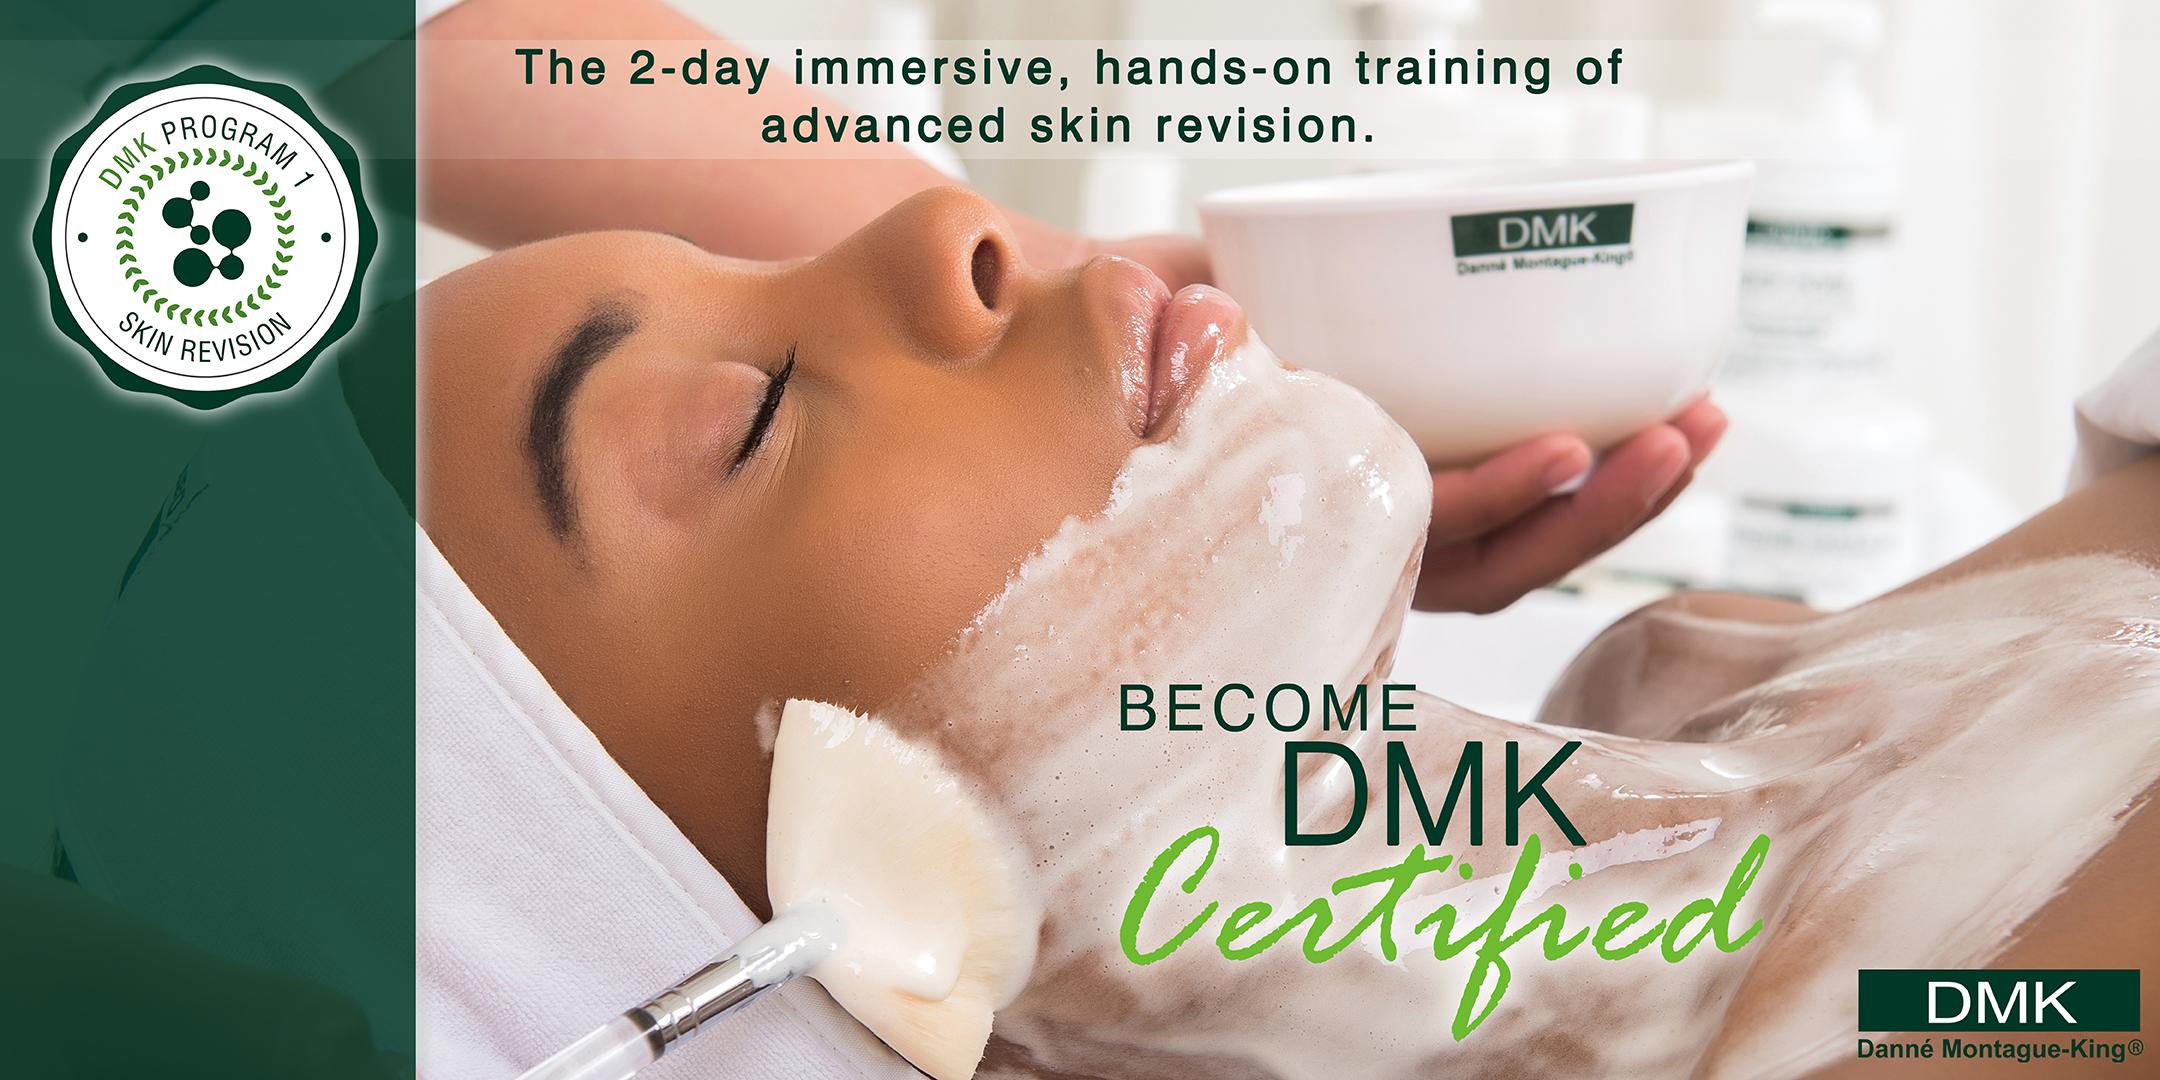 DMK LA, CA DMK Skin Revision Training- NEW UPDATED 2021 Program One